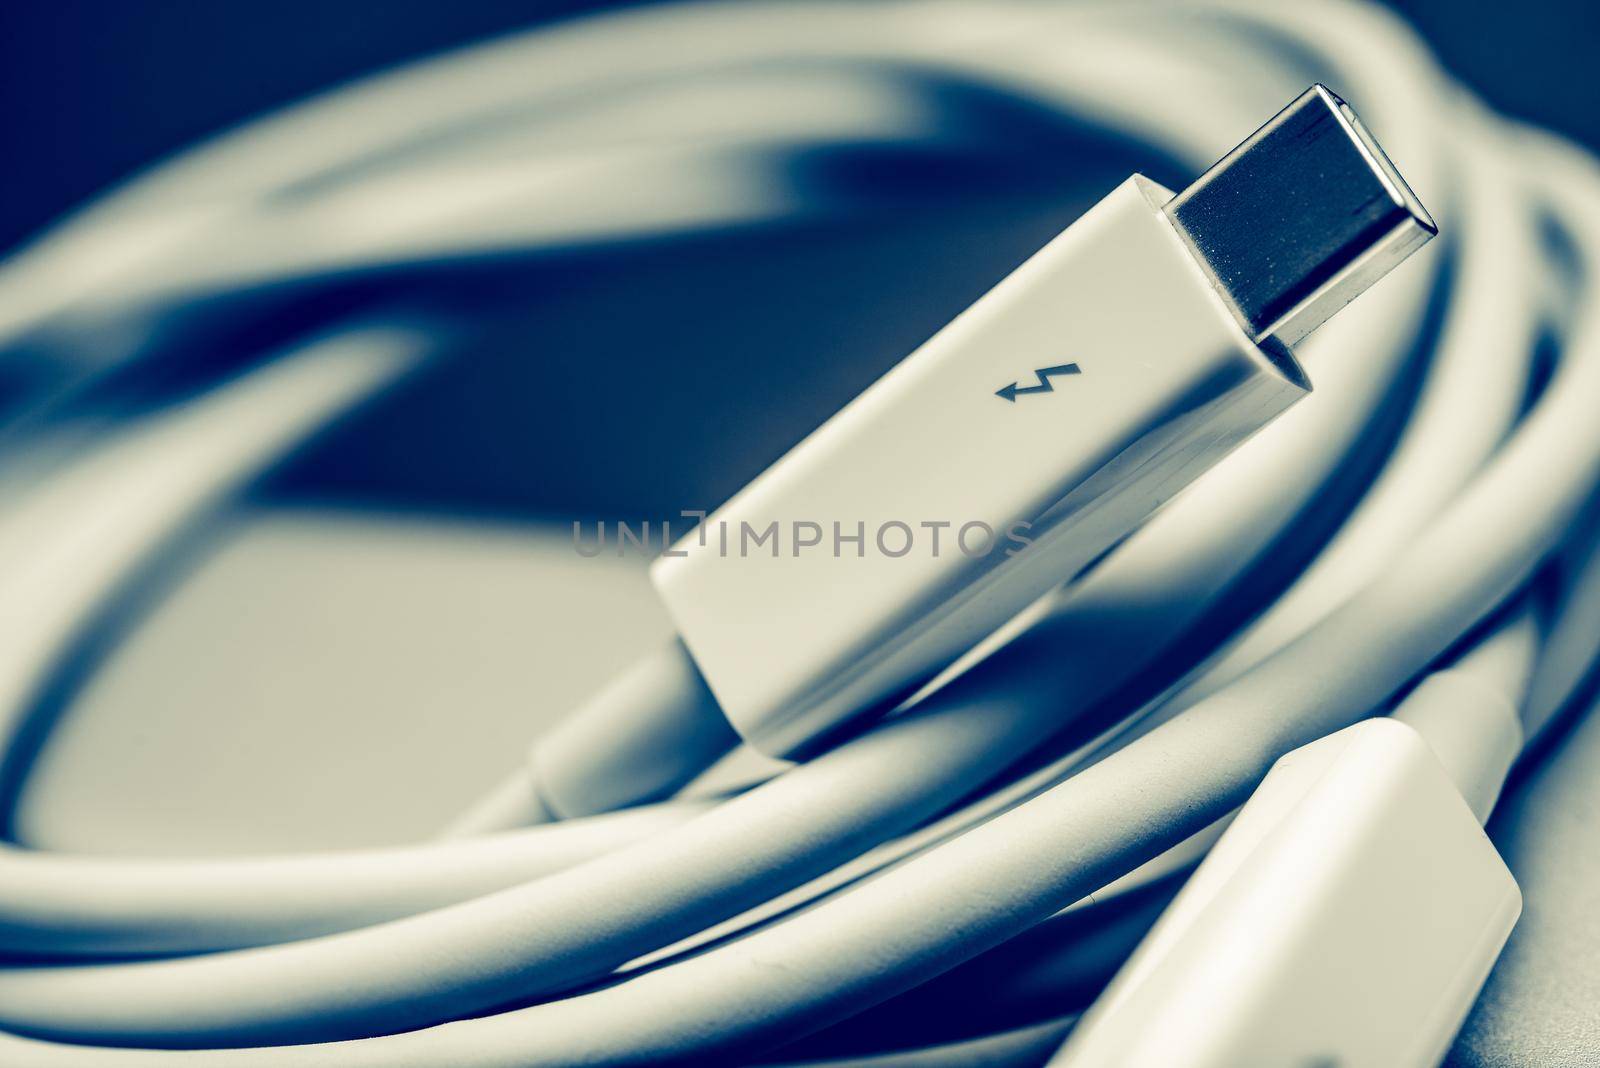 White Thunderbolt Cable Closeup Photo. Thunderbolt Data Transfer Cable.